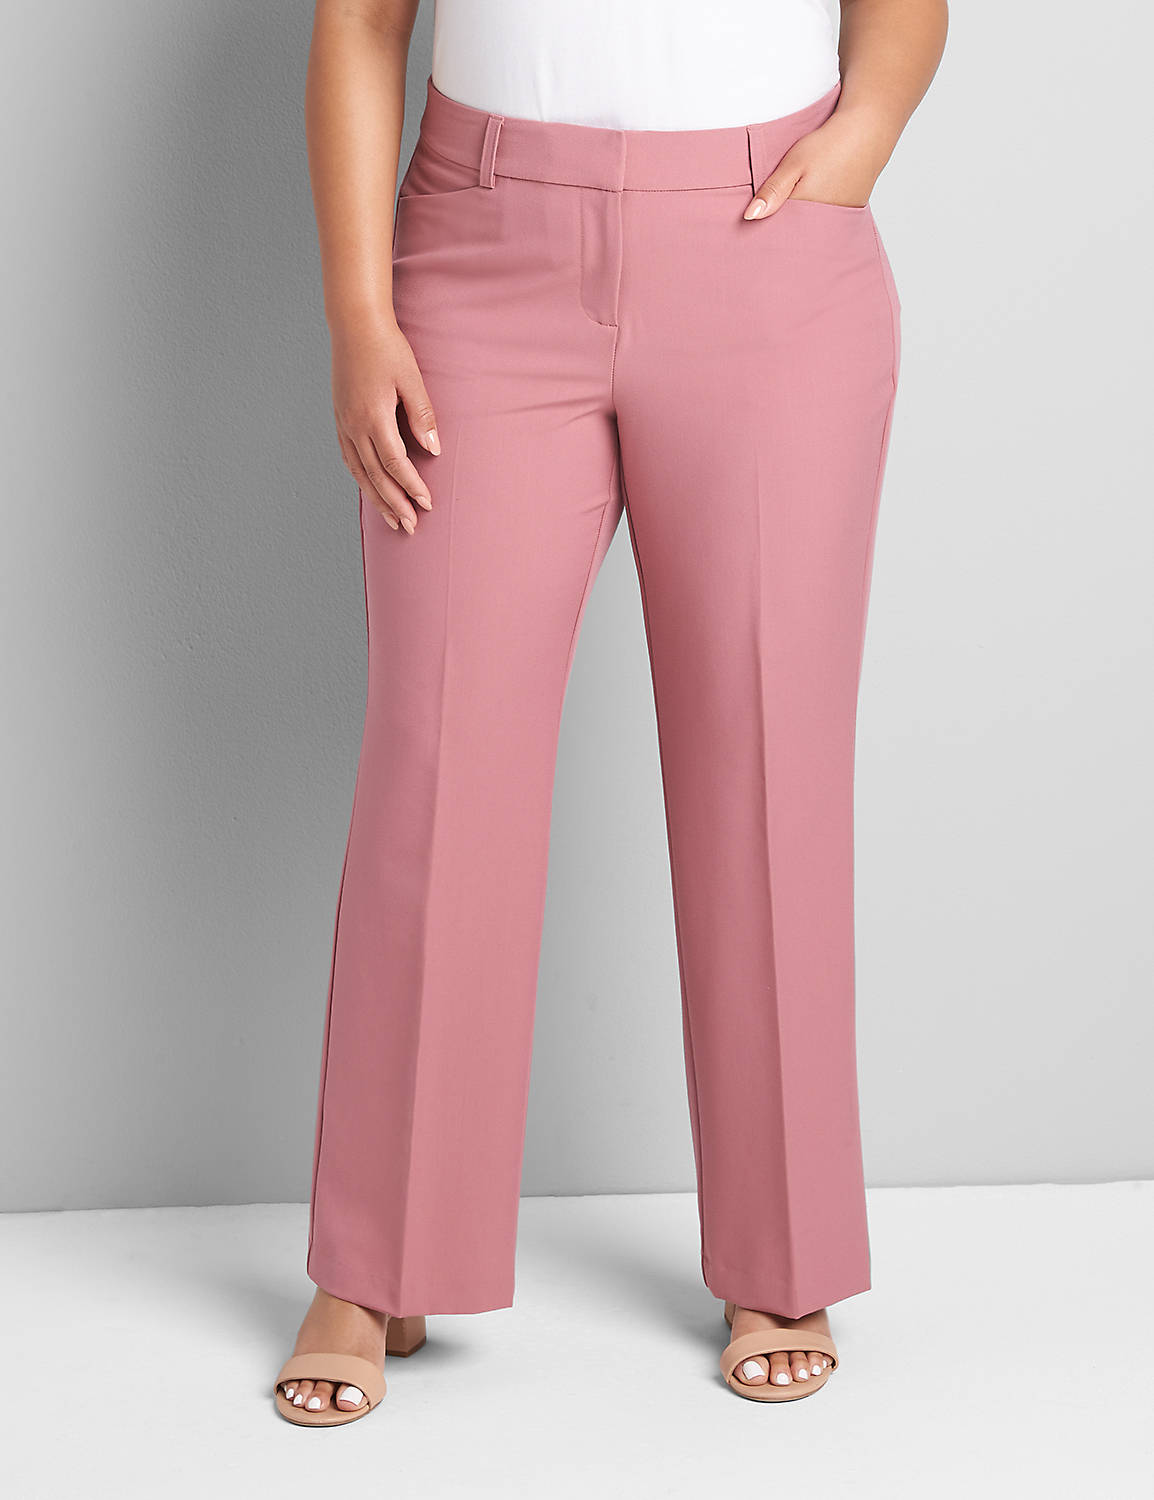 Lane Essentials Houston Trouser Pant Product Image 1